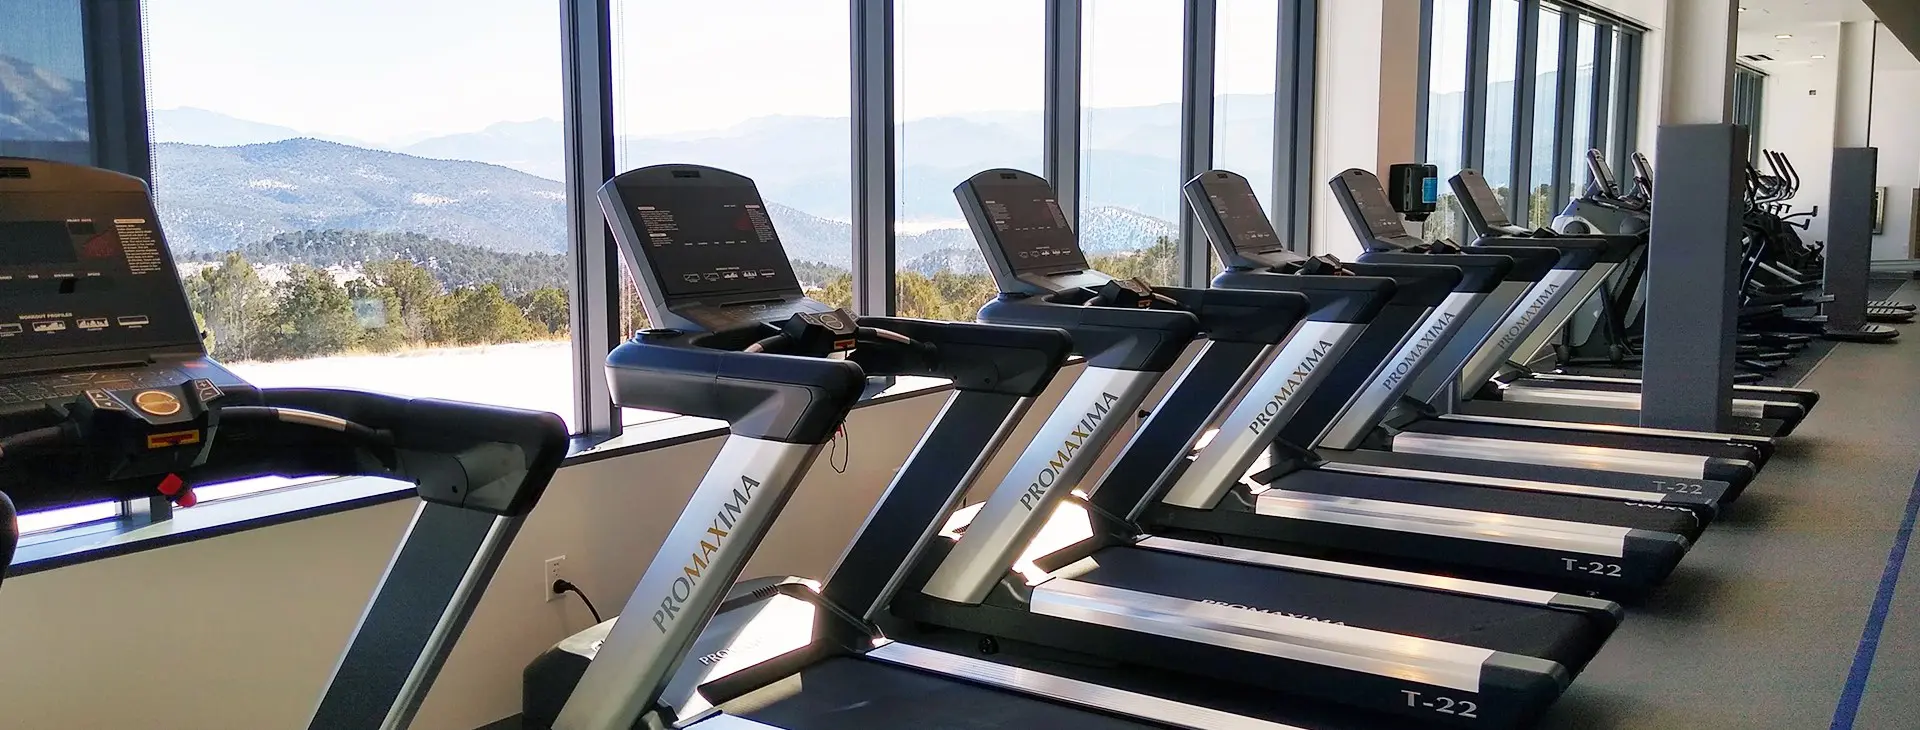 treadmill equipment in a gym